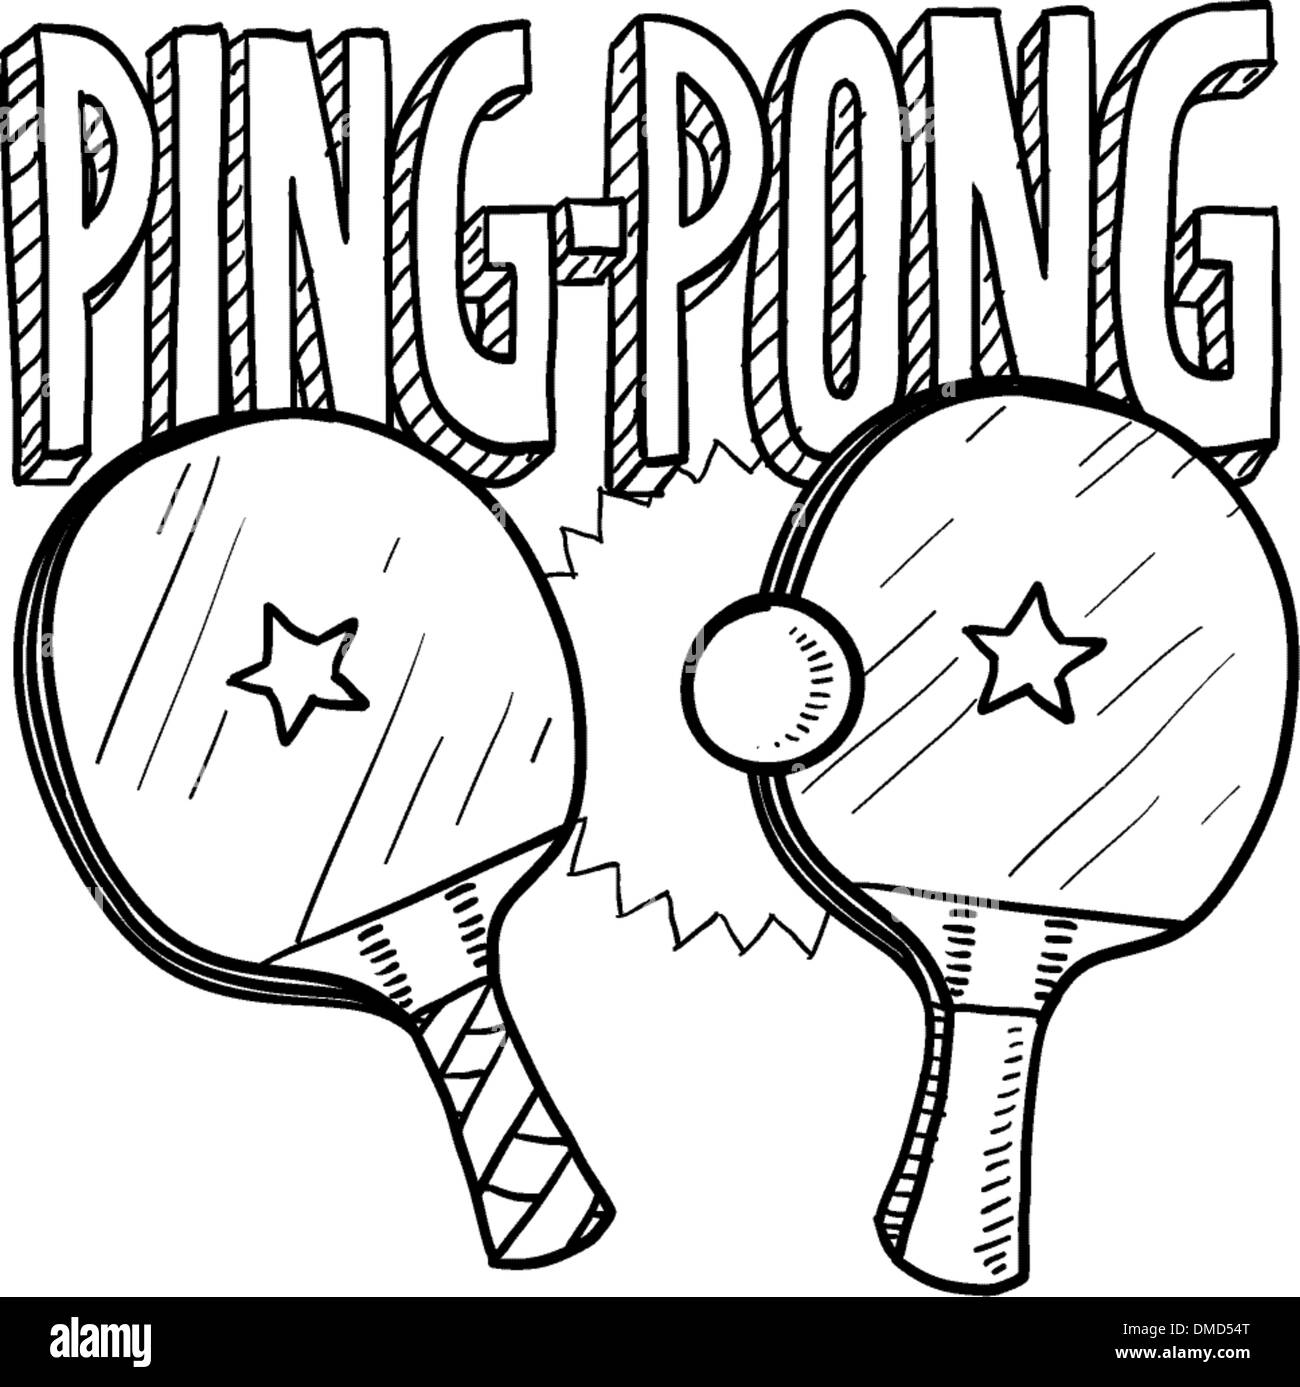 Ping pong sketch Stock Vector